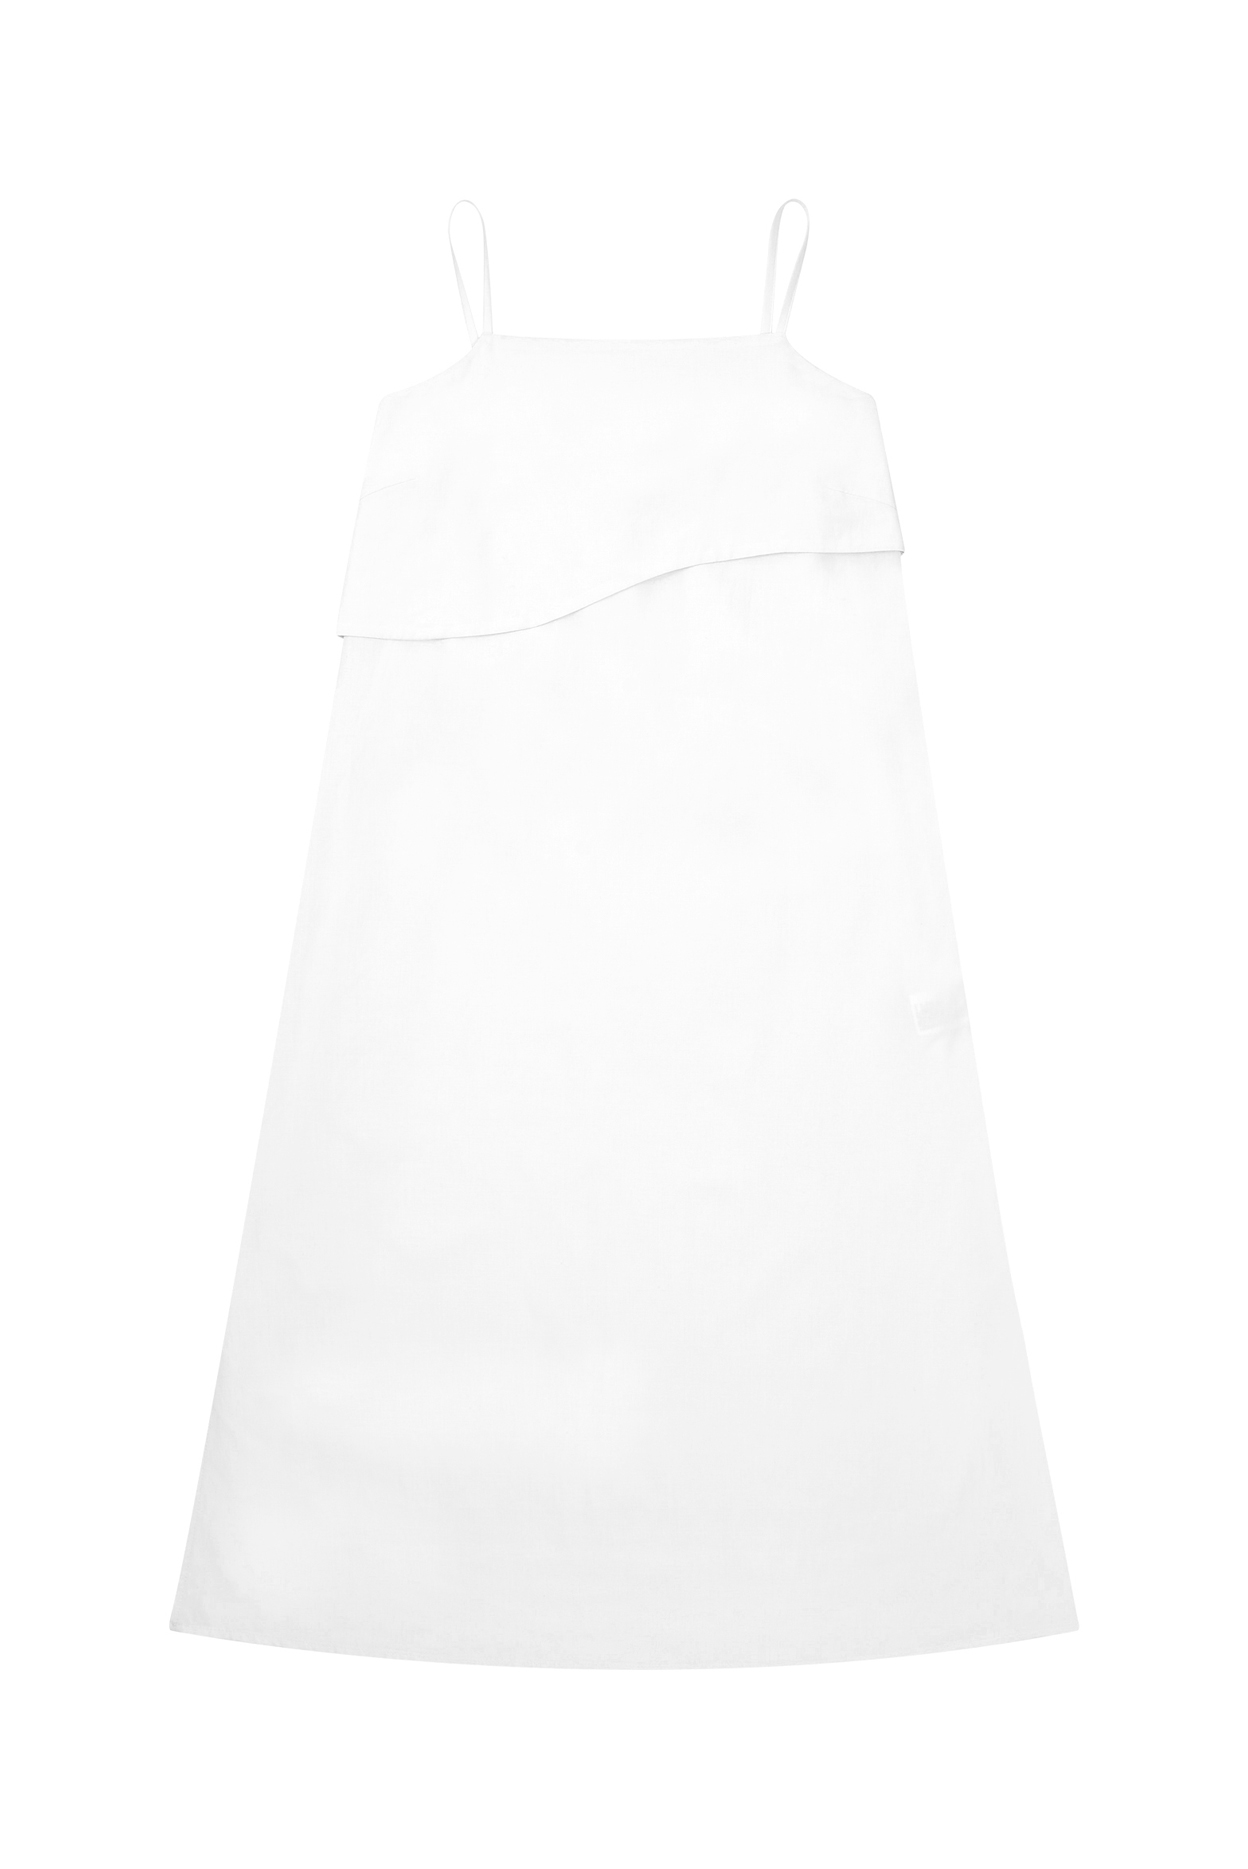 BUCKLE SLEEVELESS DRESS-white, 혜영킴, HYEYEONG KIM designer brand